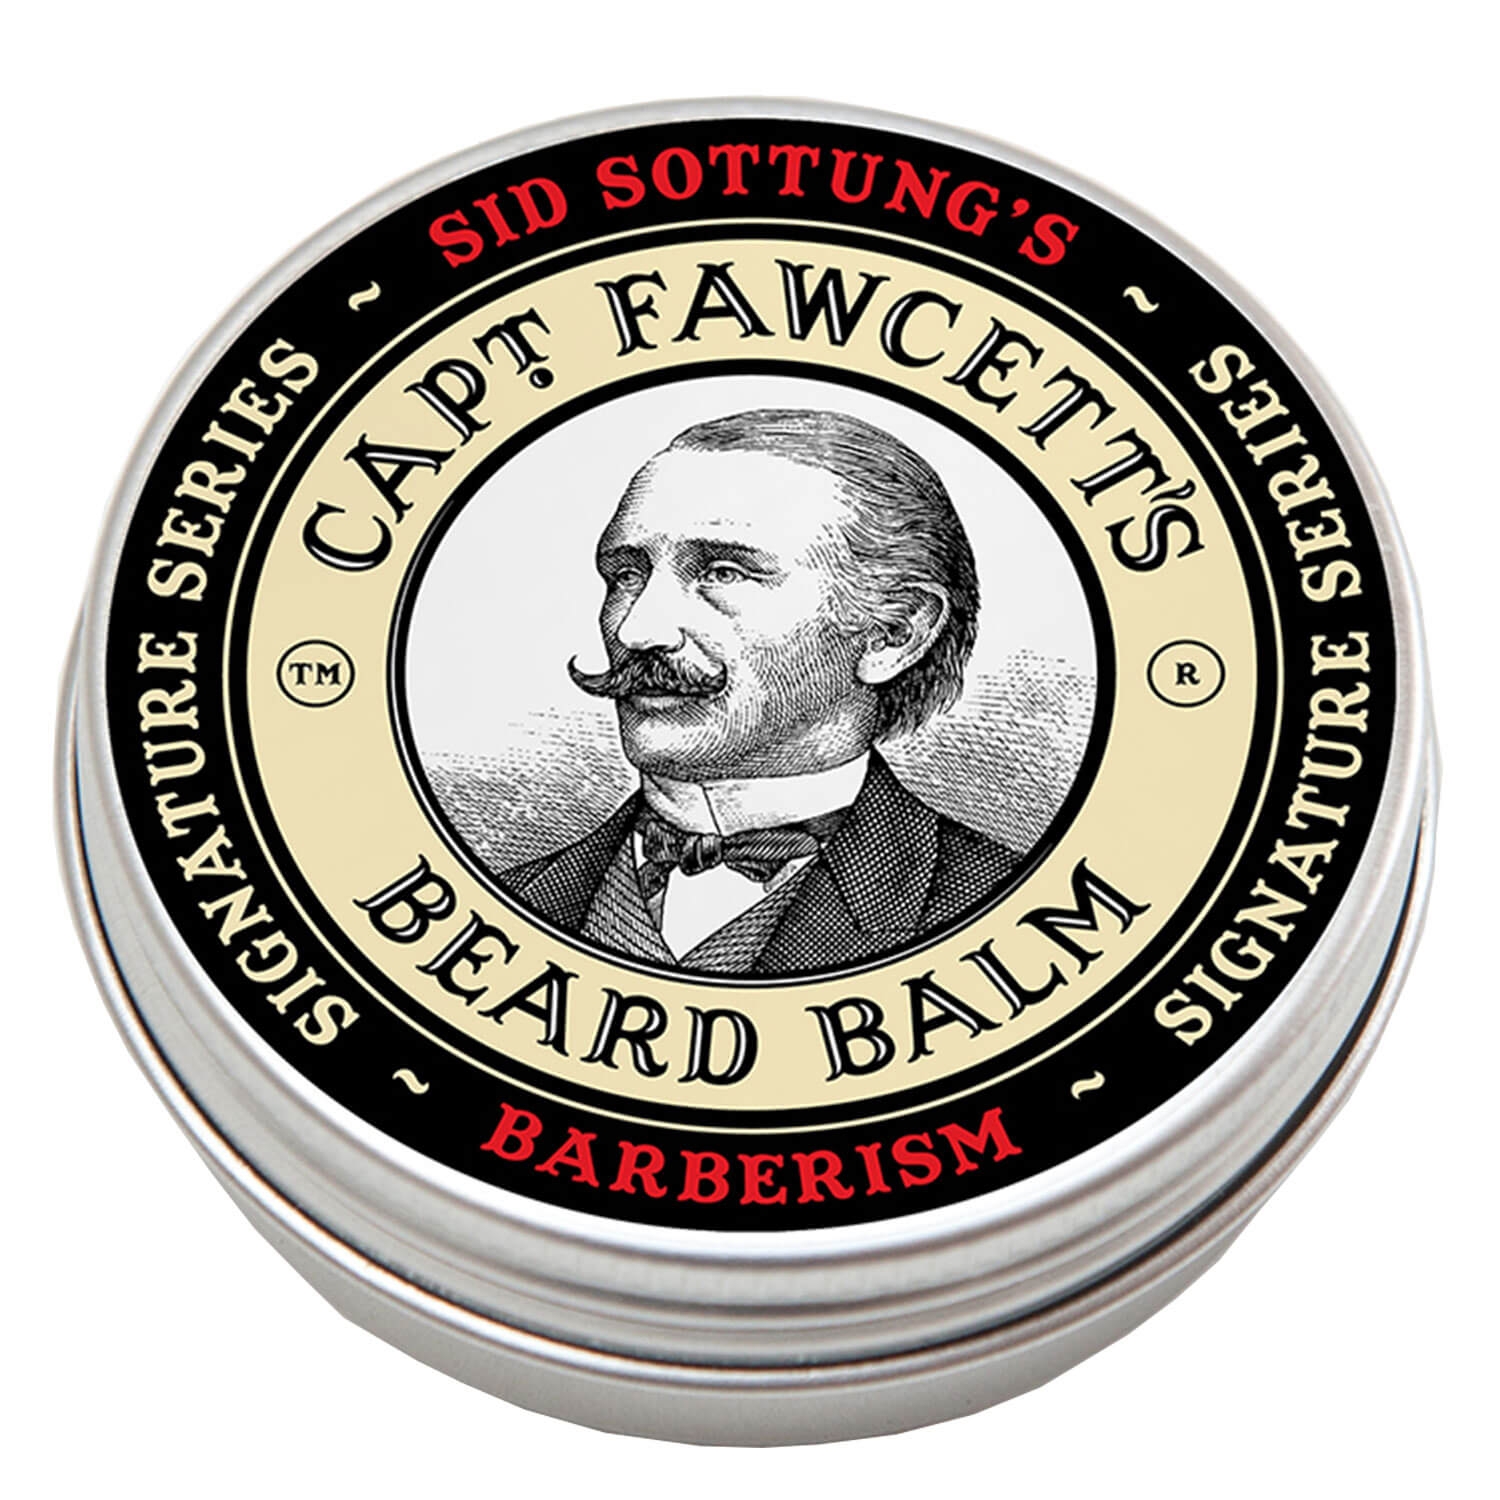 Produktbild von Capt. Fawcett Care - Sid Sottung's Barberism Beard Balm